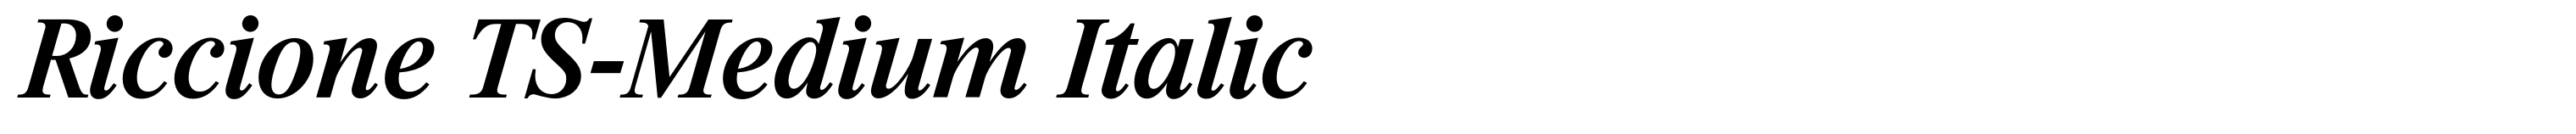 Riccione TS-Medium Italic